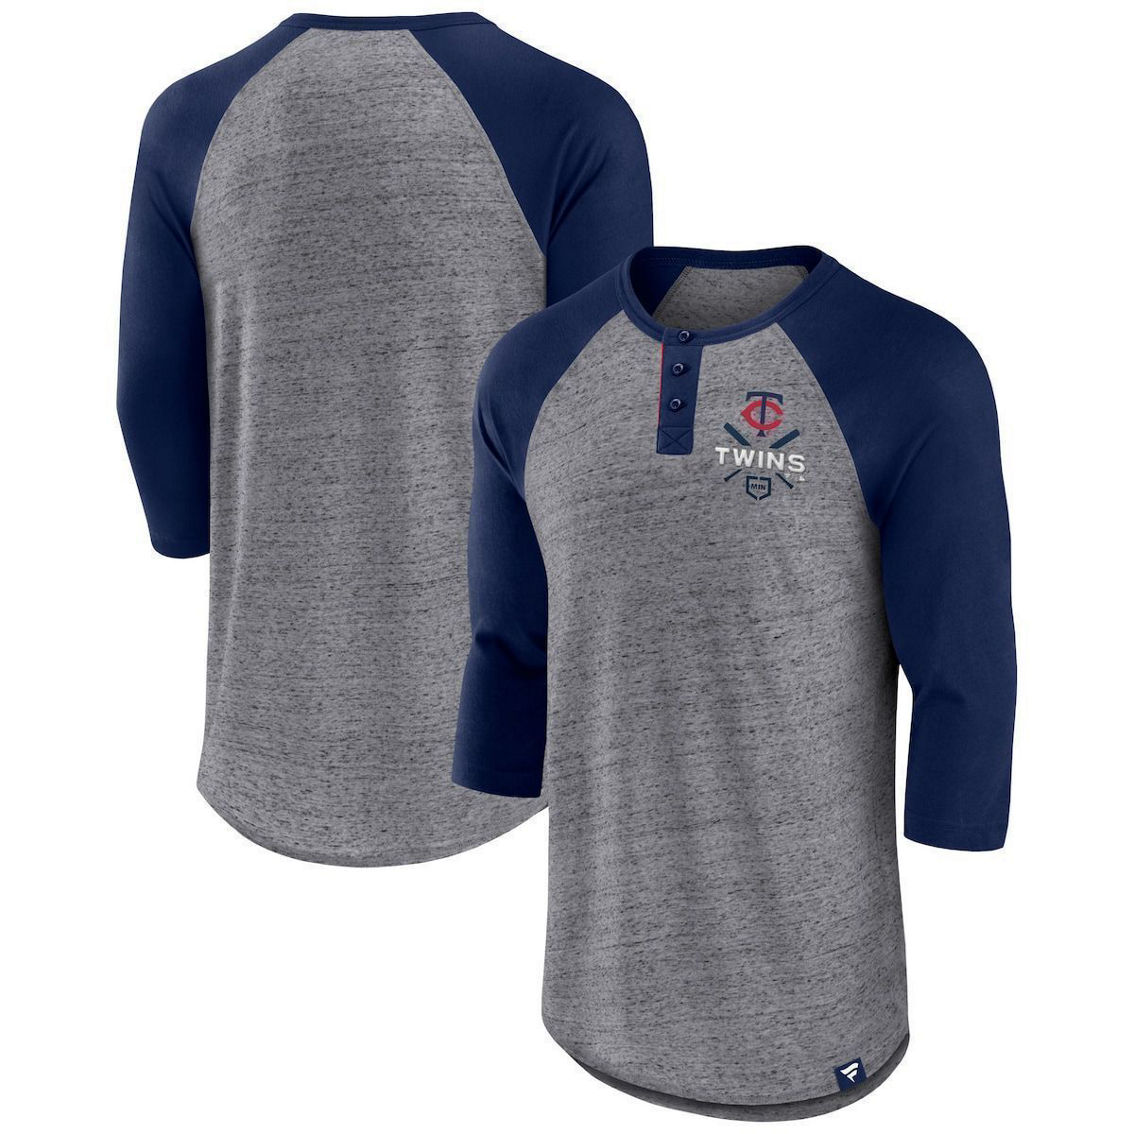 Fanatics Branded Men's Heathered Gray/Navy Minnesota Twins Iconic Above Heat Speckled Raglan Henley 3/4 Sleeve T-Shirt - Image 2 of 4